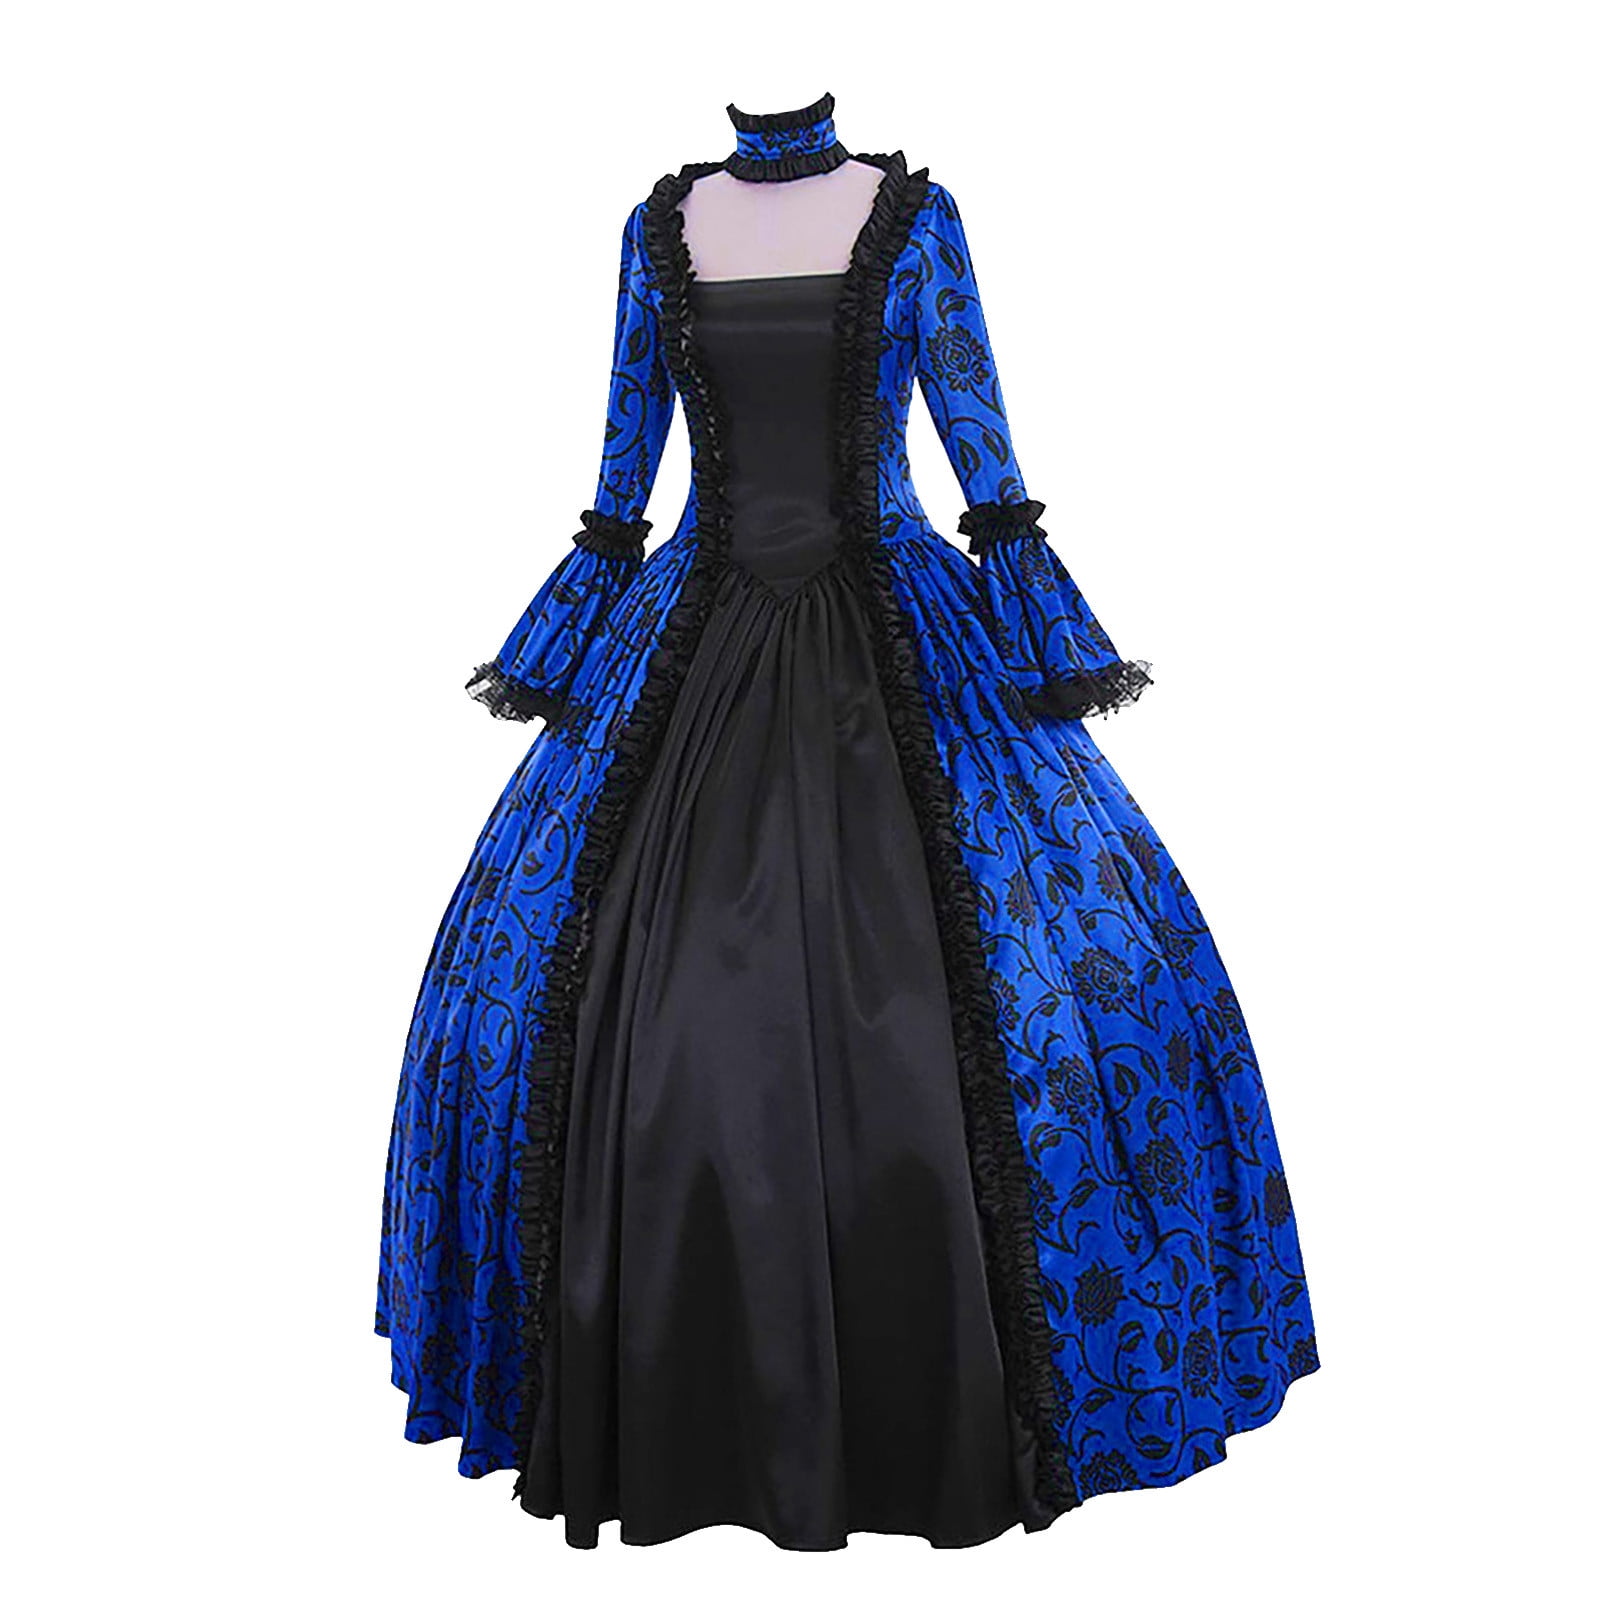  CTEEGC Womens Rococo Dress Cosplay Medieval